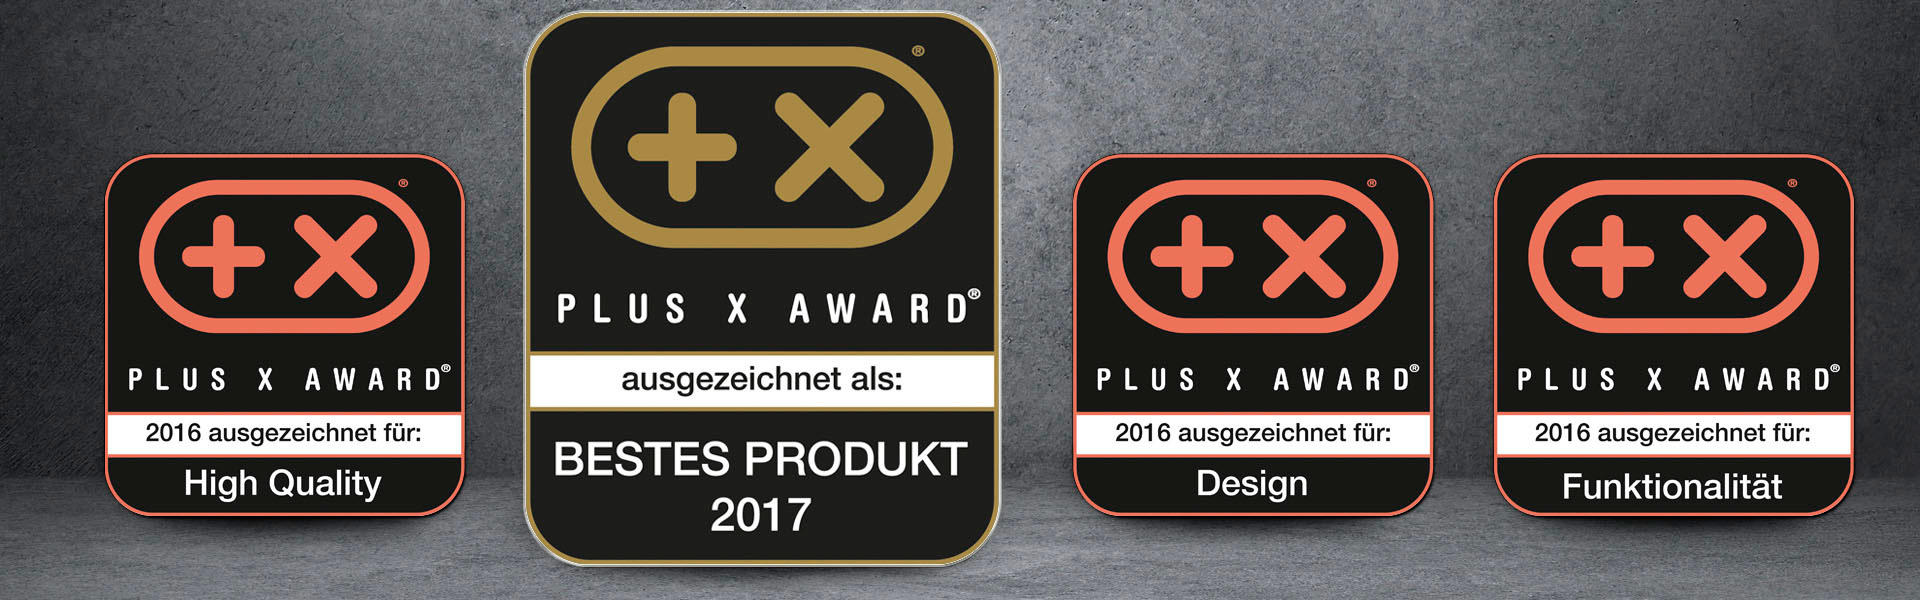 plus-x-award